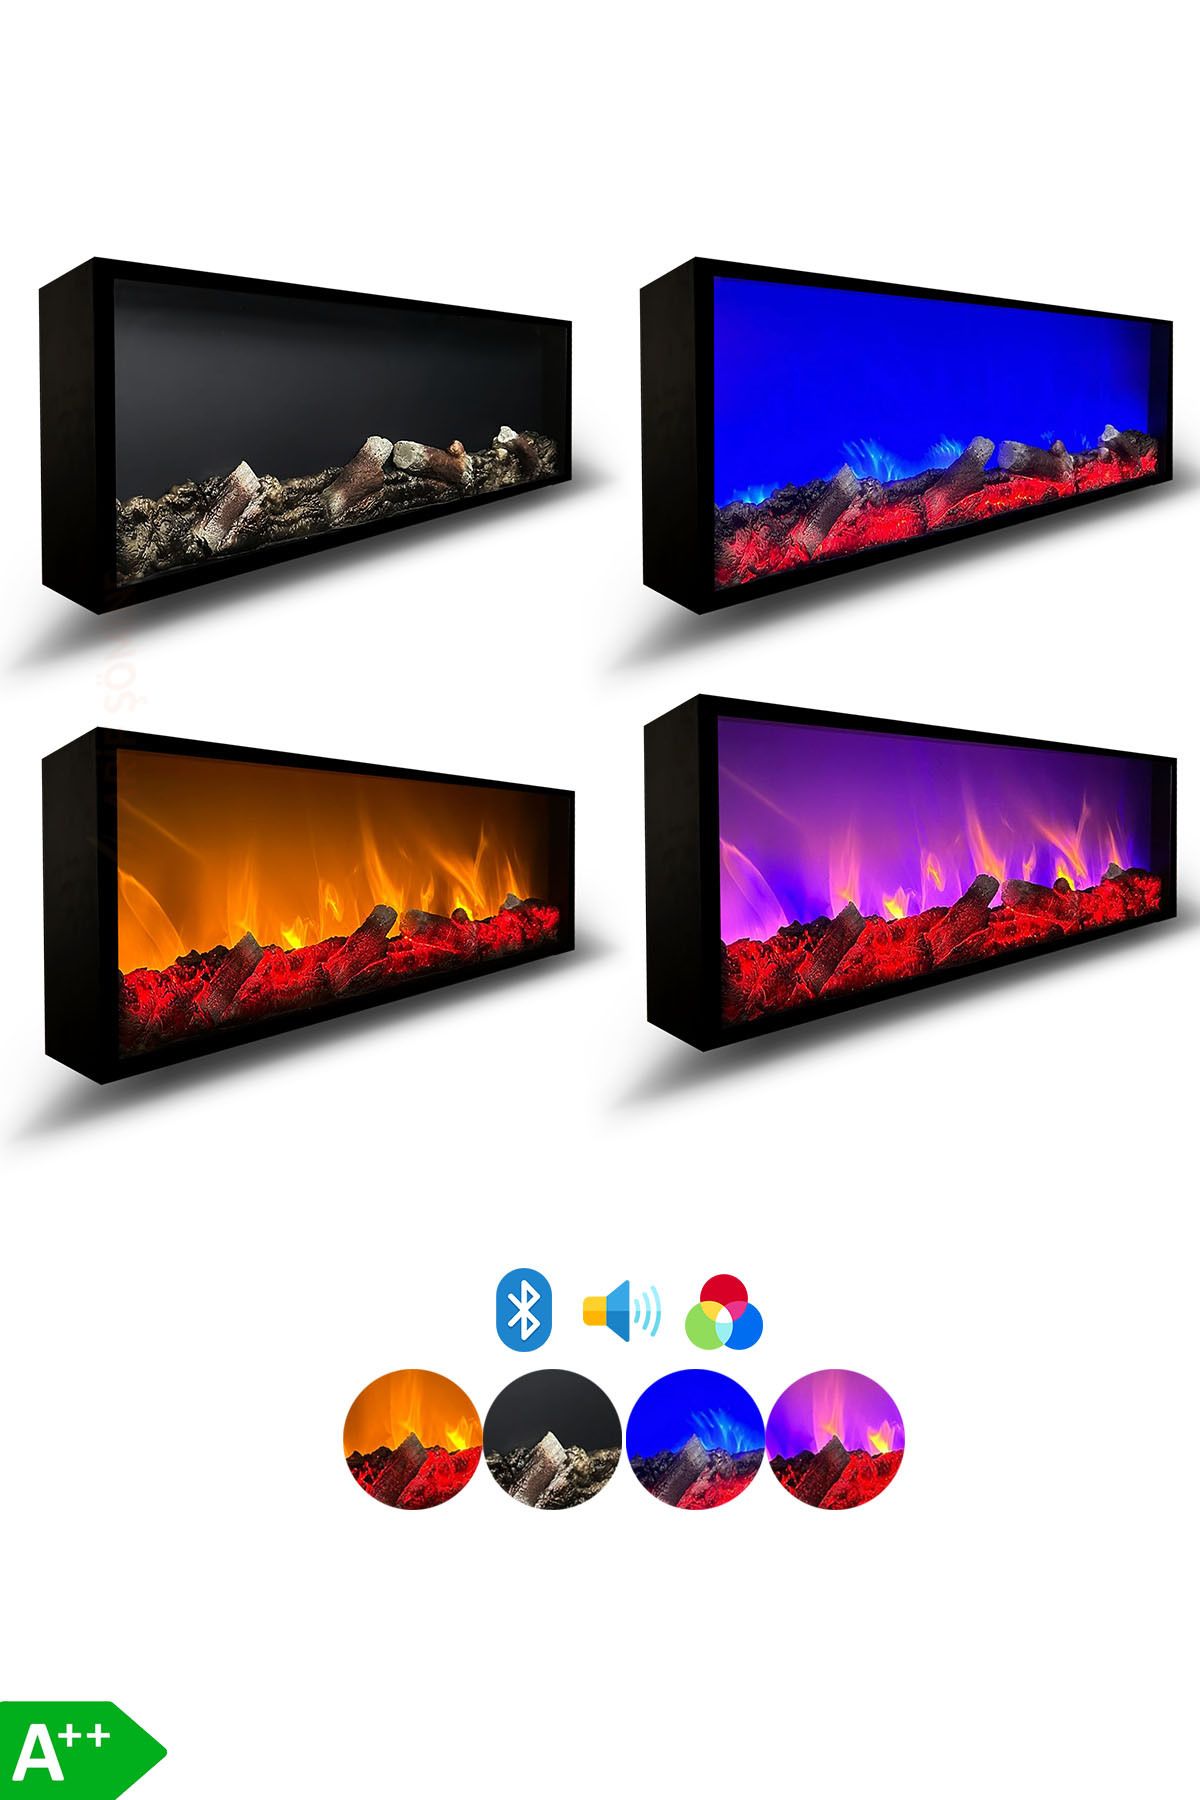 ARİF Dekoratif Elektrikli Yapay Şömine - 130x35x15 Cm - Farklı Renk Modları, Kumandalı, Bluetooth